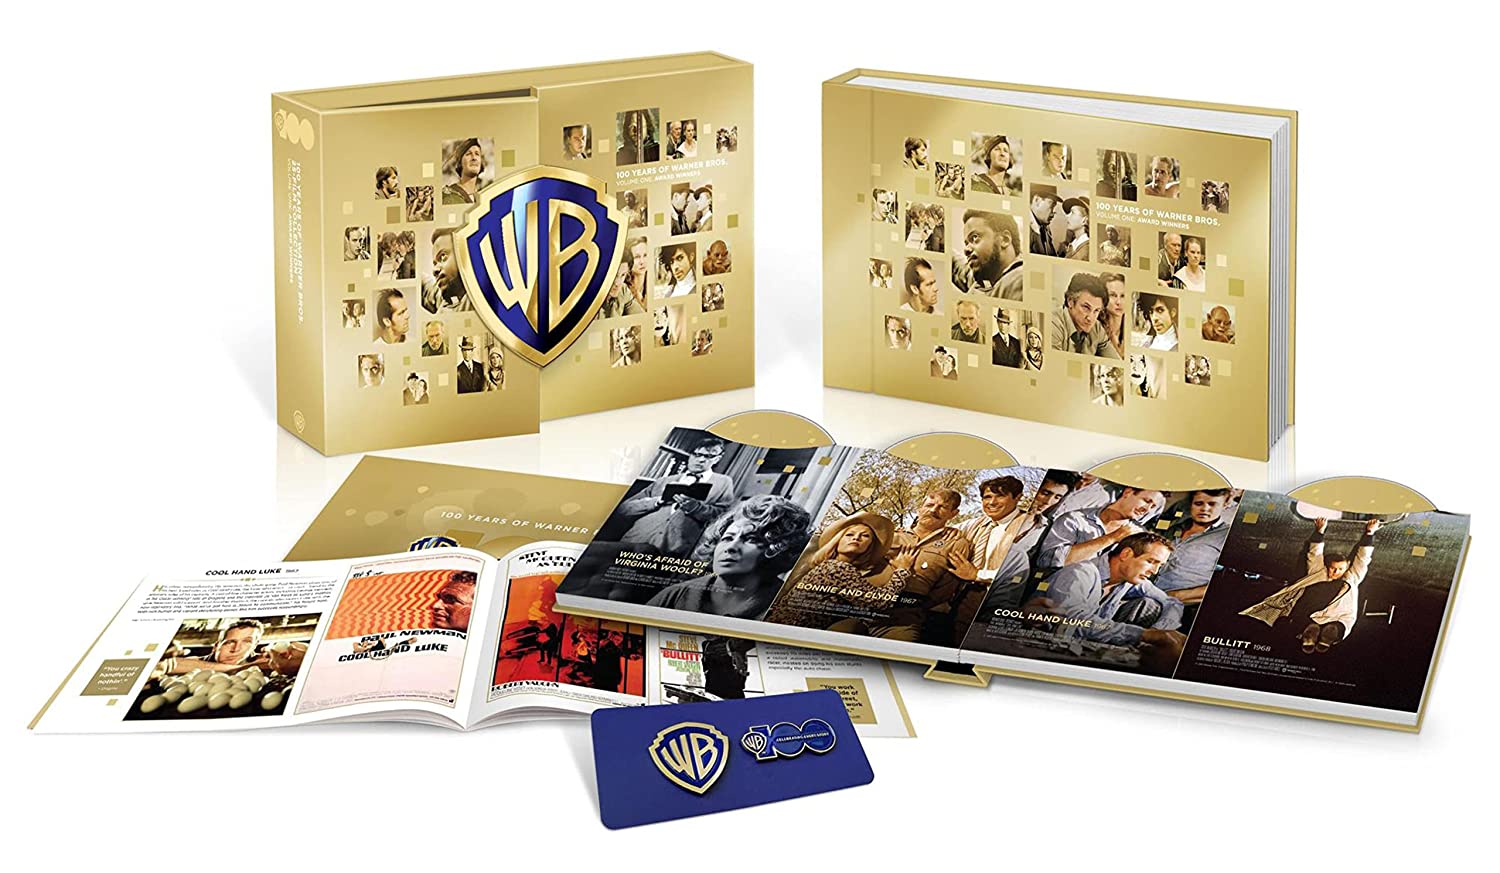 Warner-Bros. 100th Anniversary Vol. One Award Winners Blu-ray opened